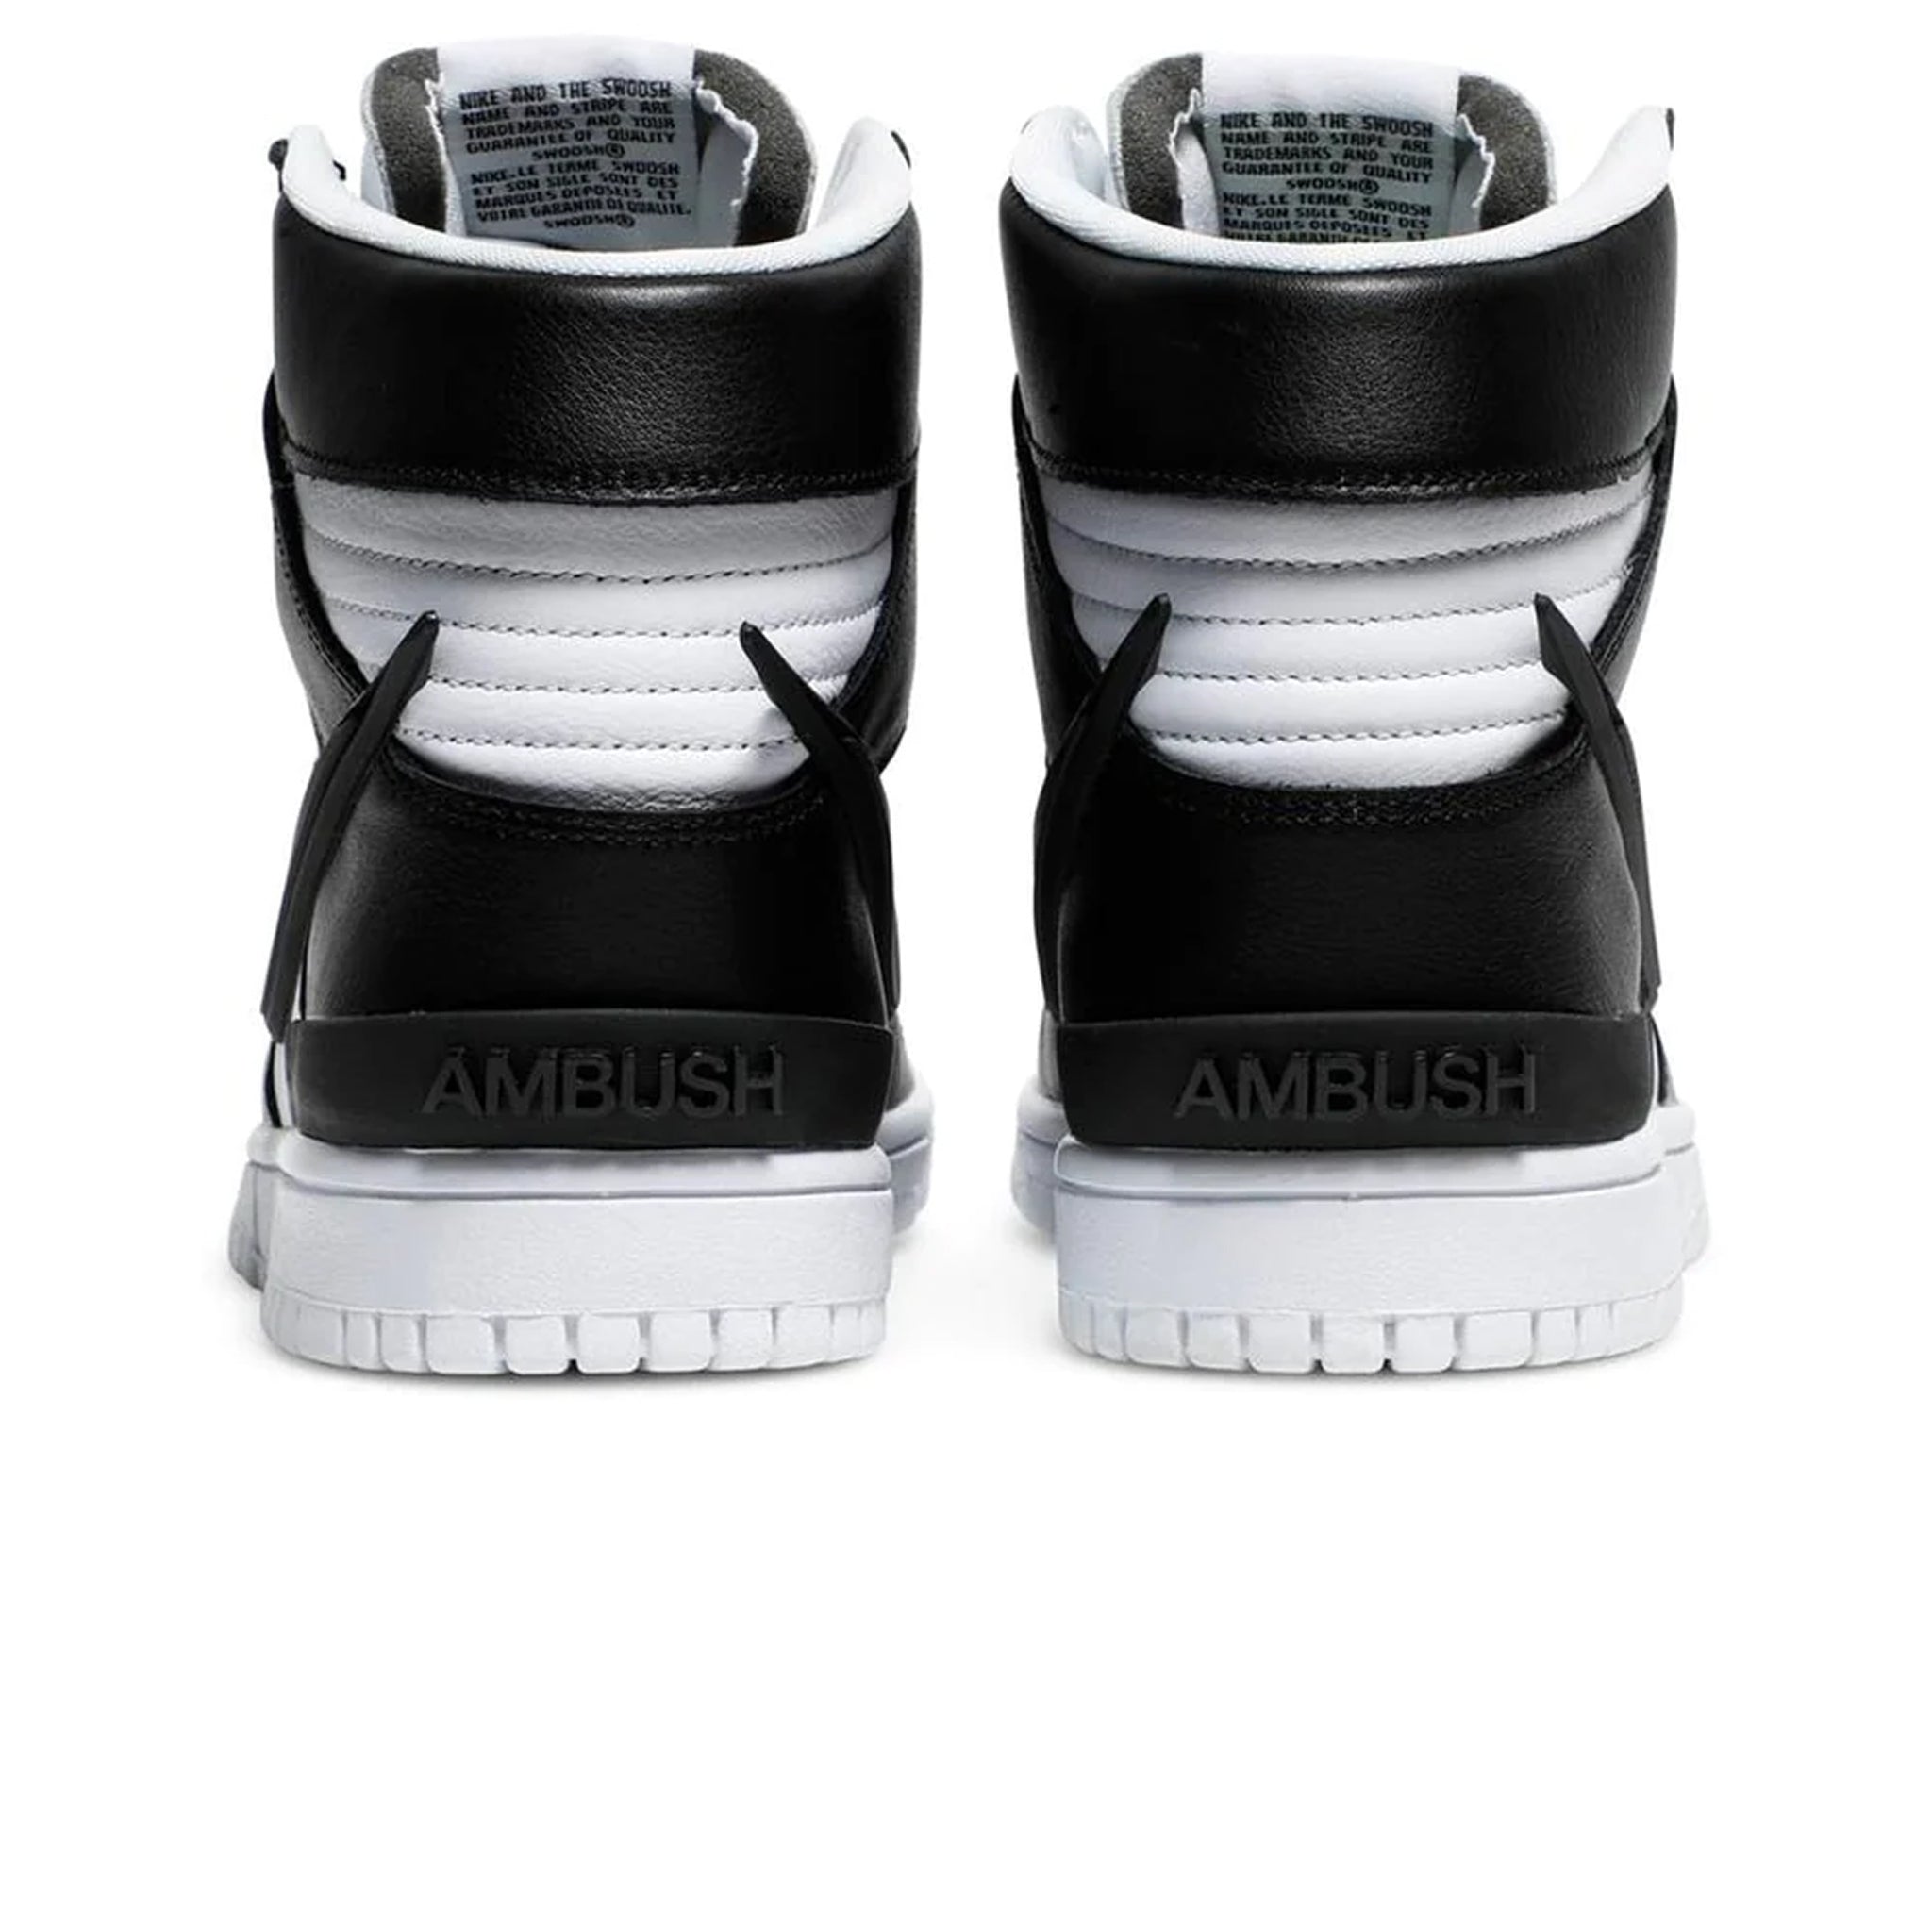 Heel view of Nike Dunk High Ambush Black White Sneaker CU7544-001